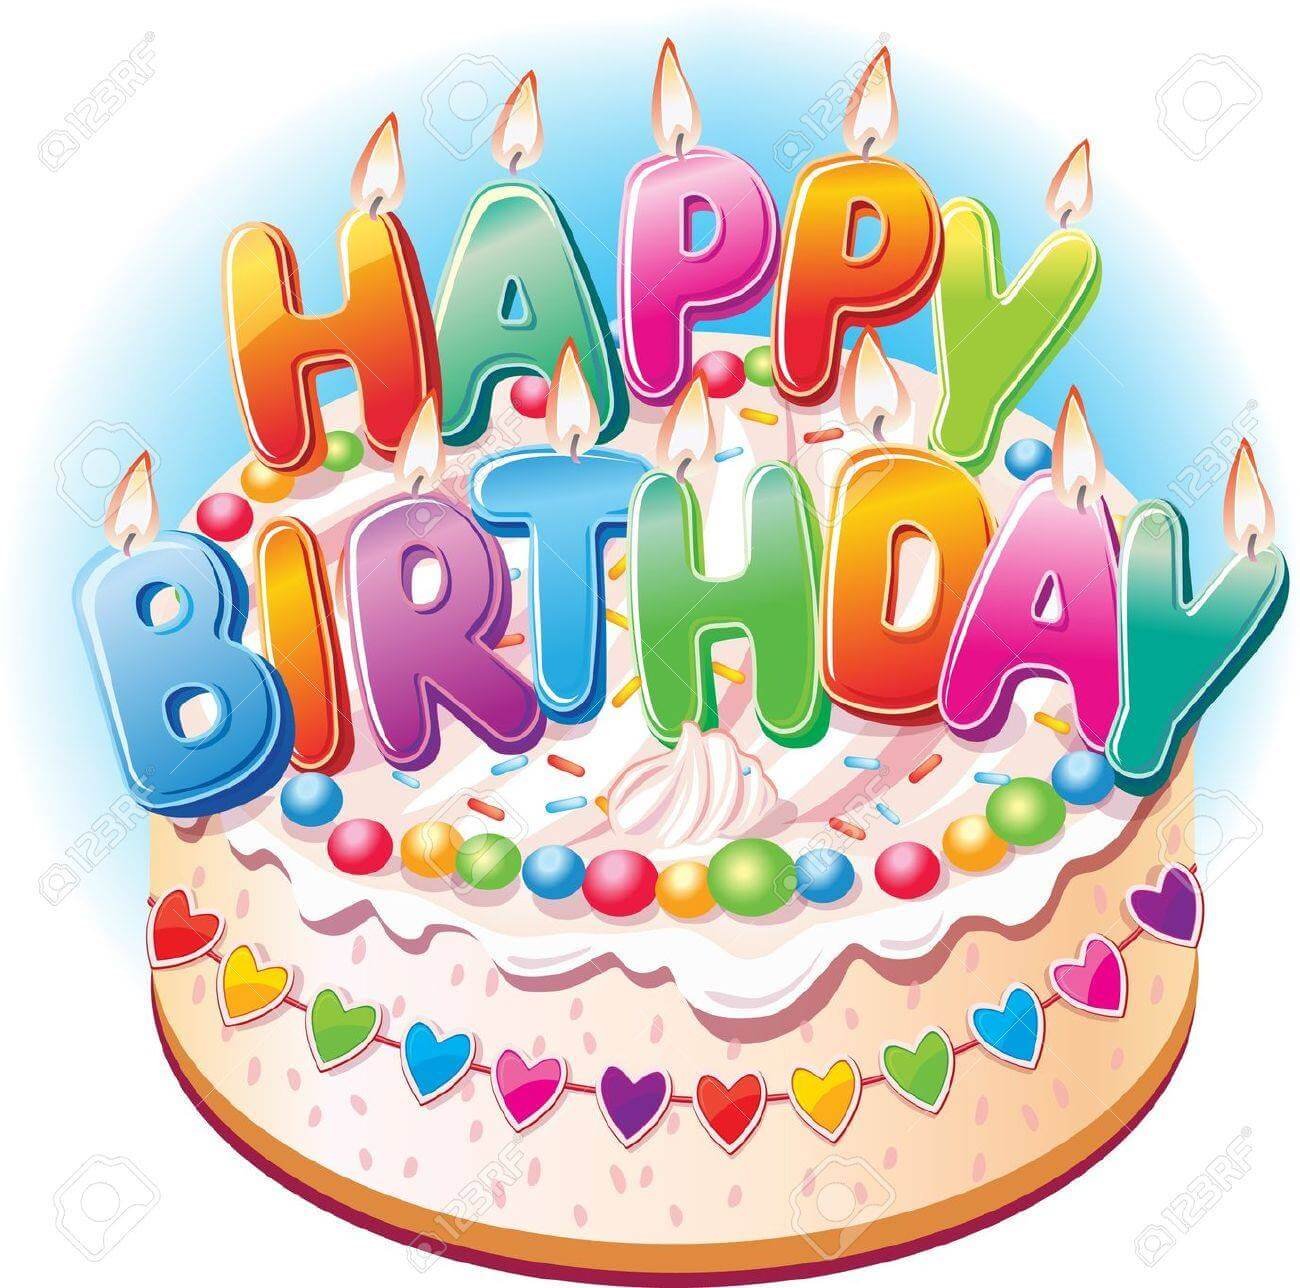 Happy Birthday Cake DownloadKorun.Com 18